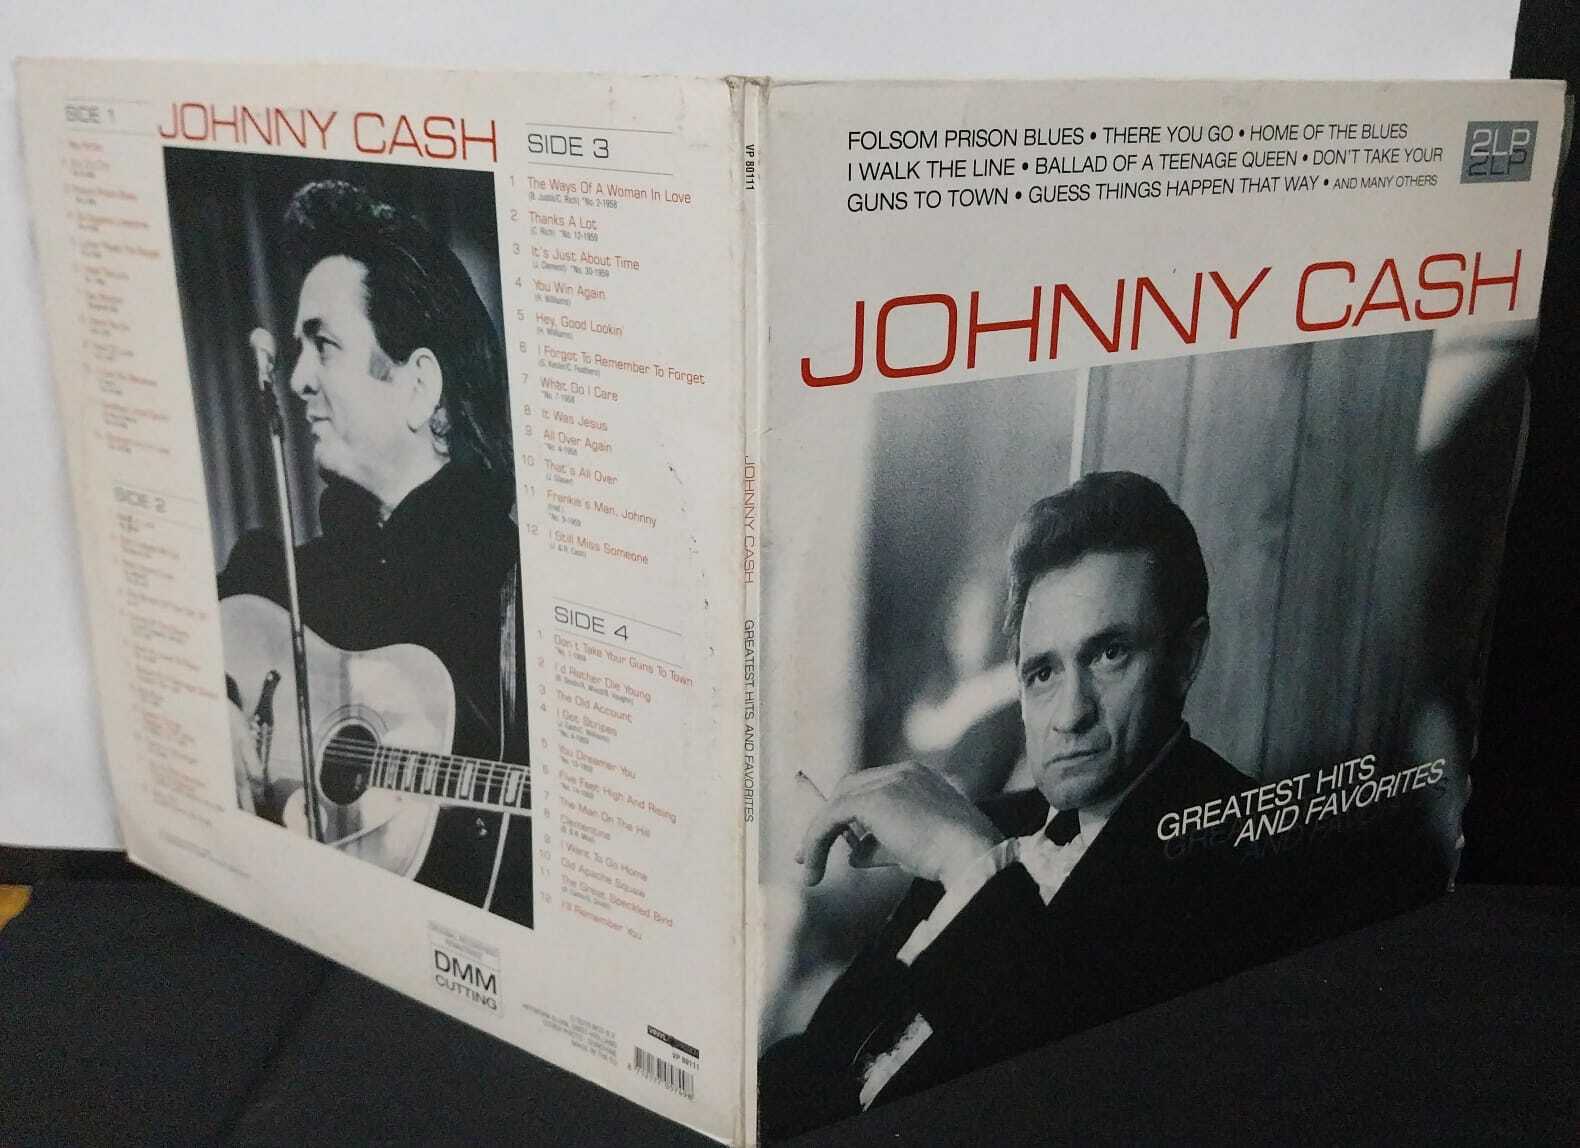 Vinil - Johnny Cash - Greatest Hits And Favorites (EU/Duplo)